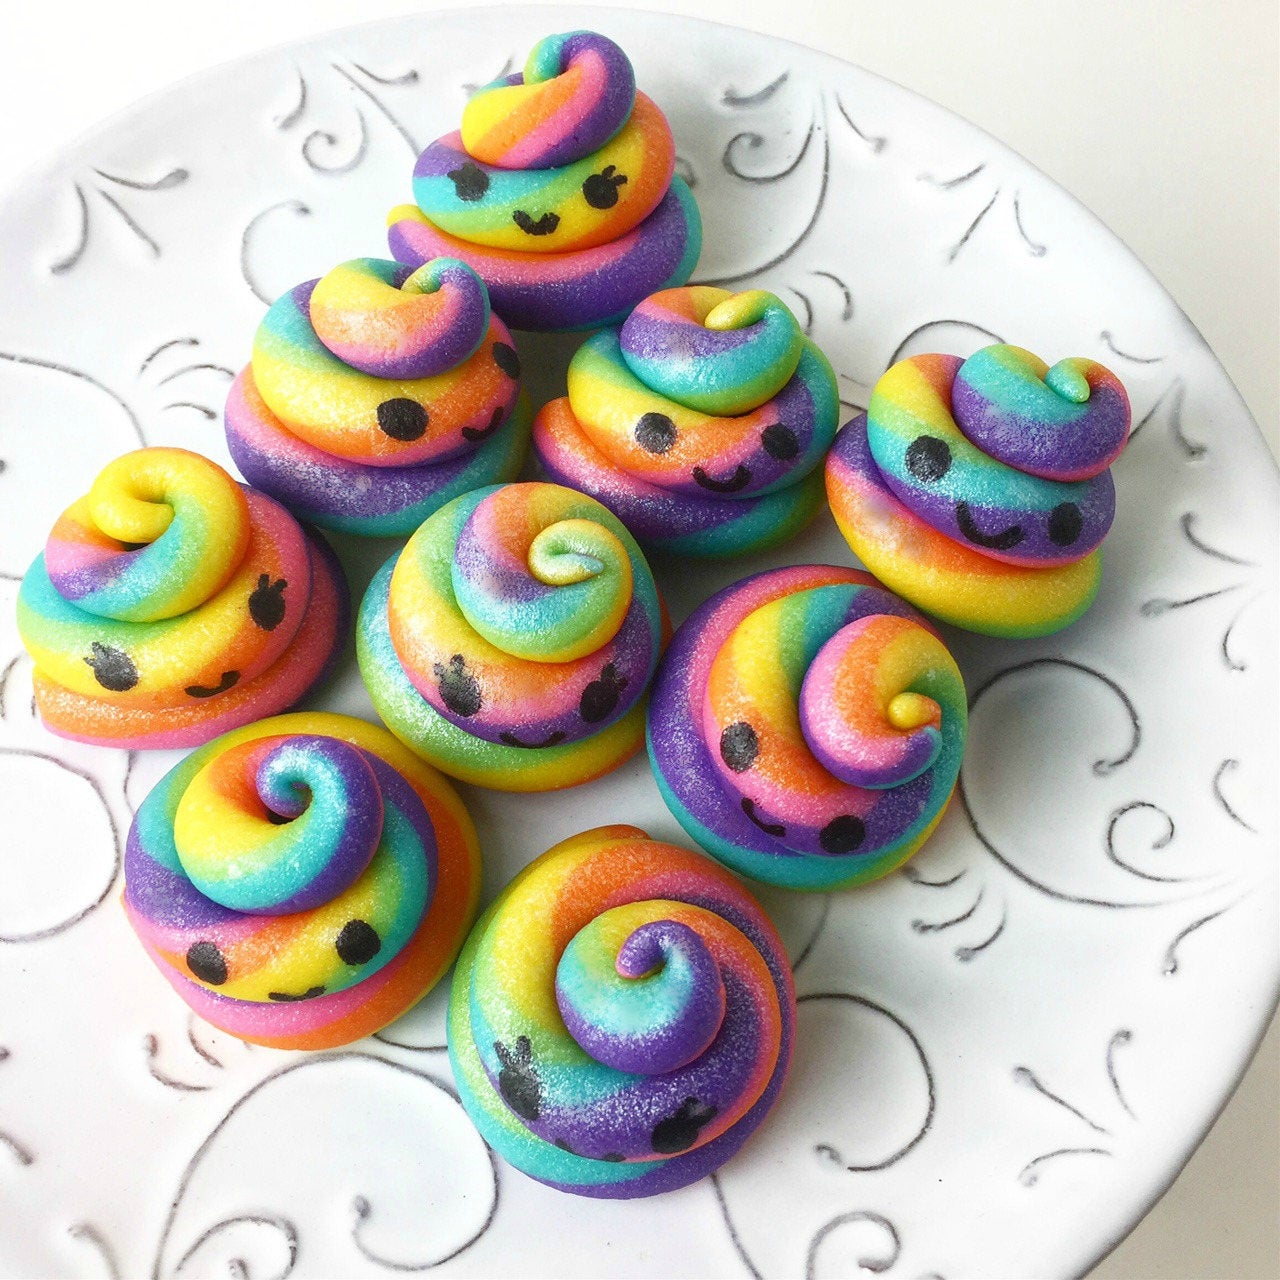 kawaii rainbow unicorn poop marzipan candy sculpture treats with happy faces